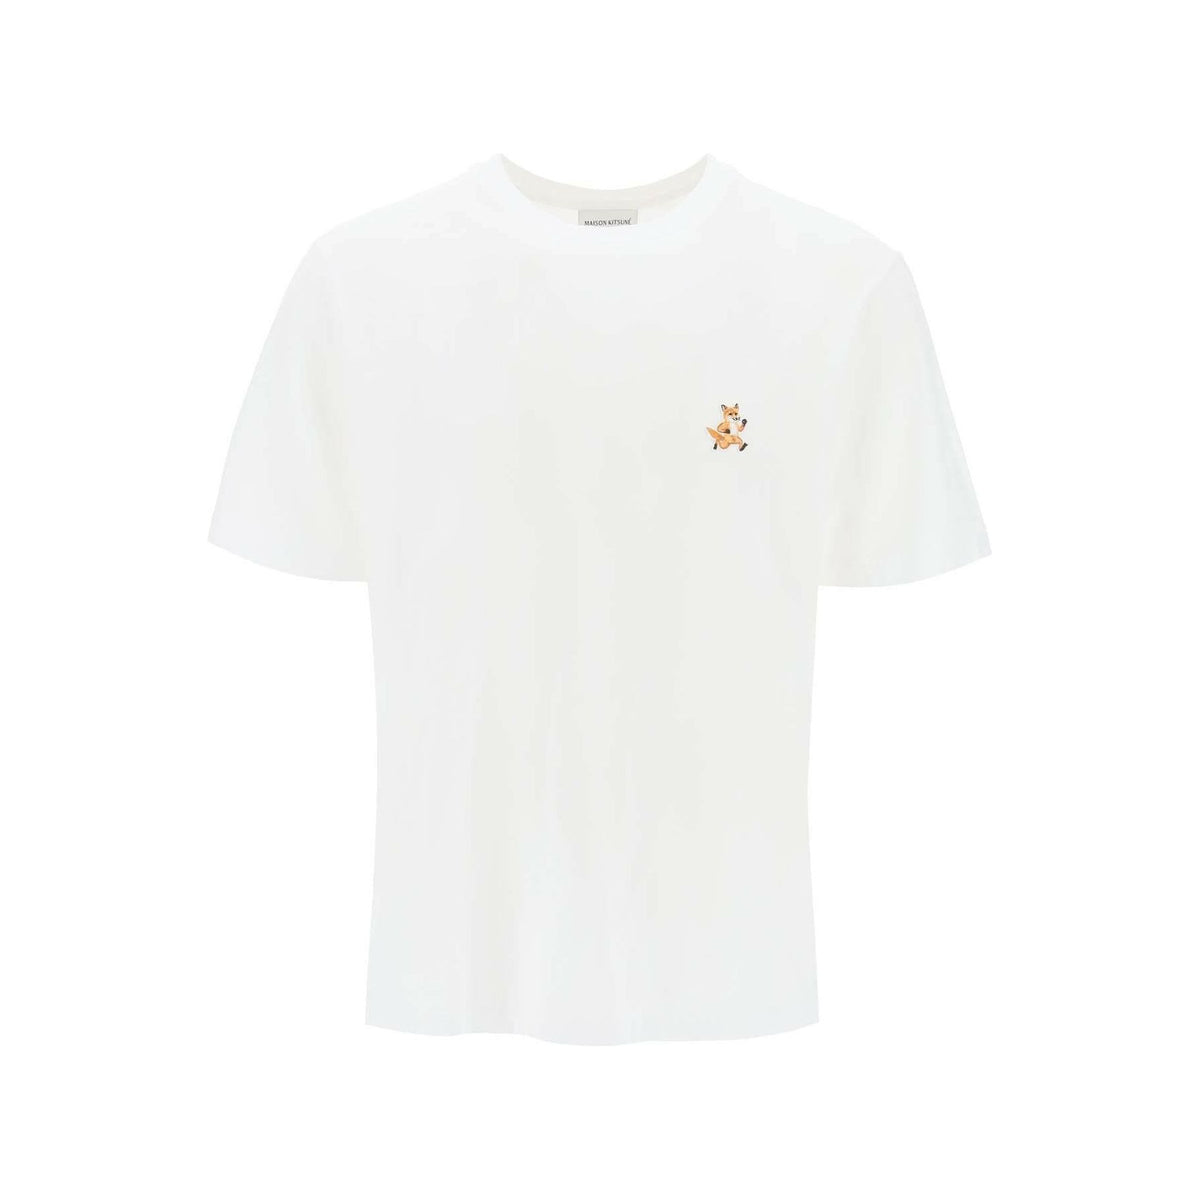 MAISON KITSUNE - White Speedy Fox Comfort Fit Cotton T-Shirt - JOHN JULIA